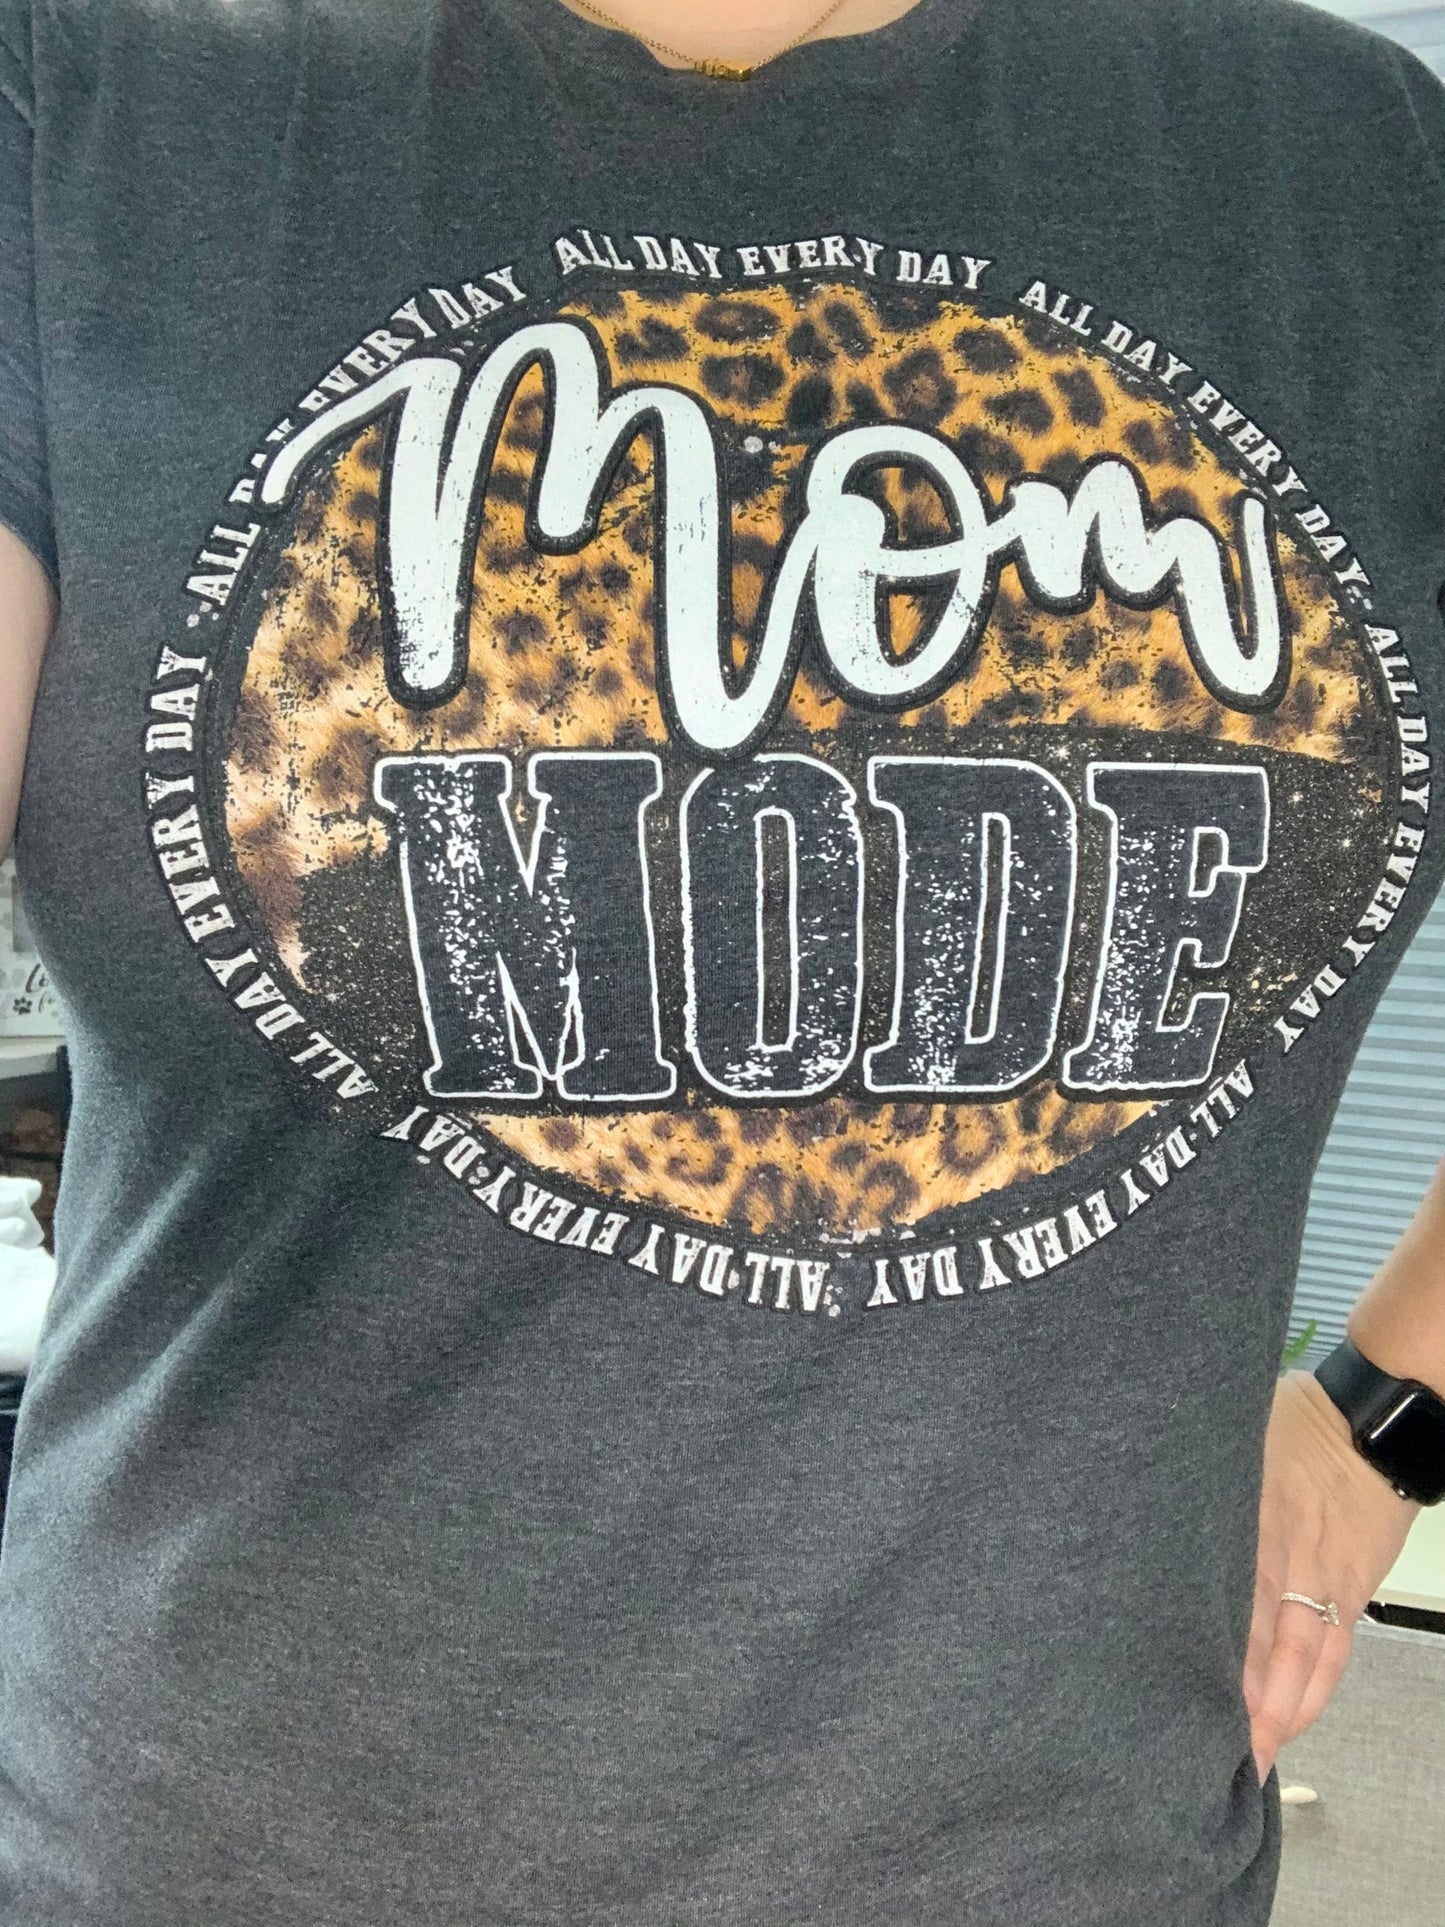 Mom Mode Graphic Tee